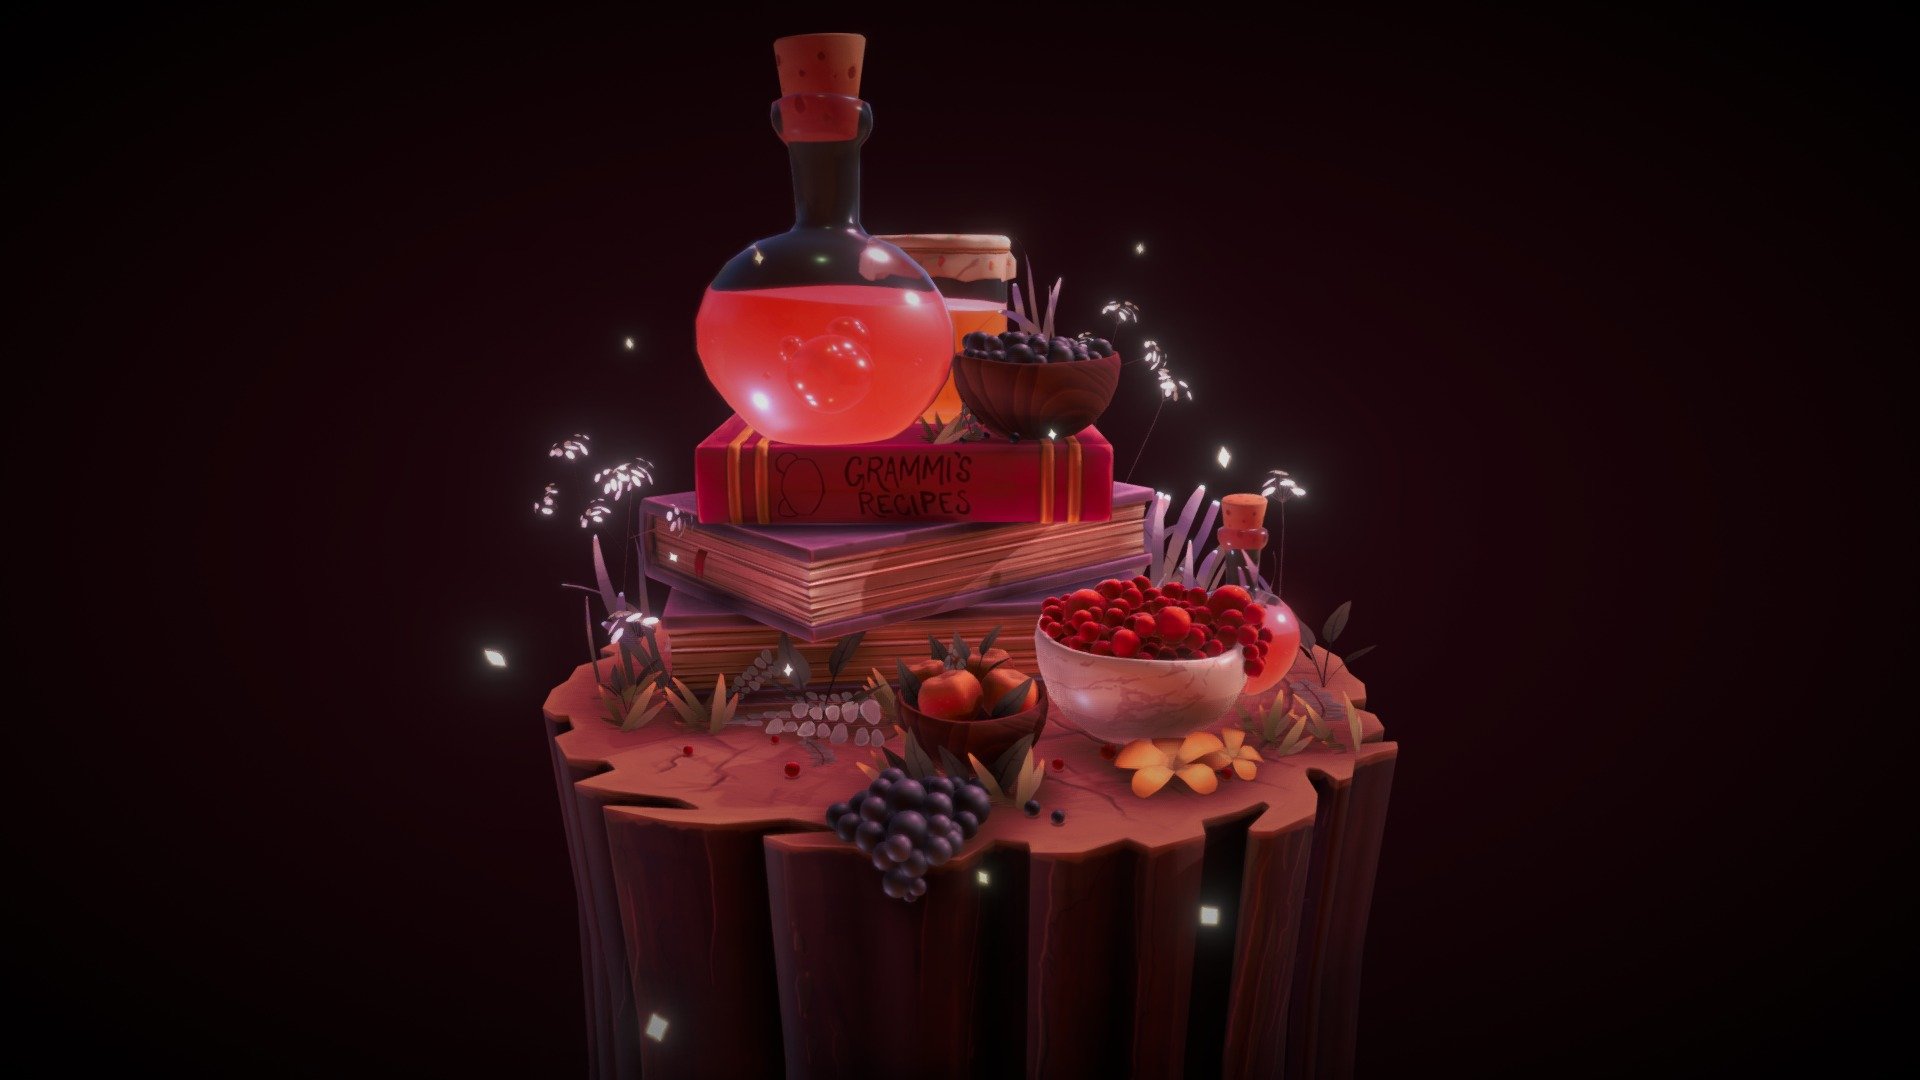 Based on original work by the super amazing Alexandria Neonakis

https://www.artstation.com/alexneonakis

3D Model based on artwork:

https://www.pinterest.co.uk/pin/495396027755544262/ - Grammi's Berry Juice - 3D model by brynethpaltrow 3d model